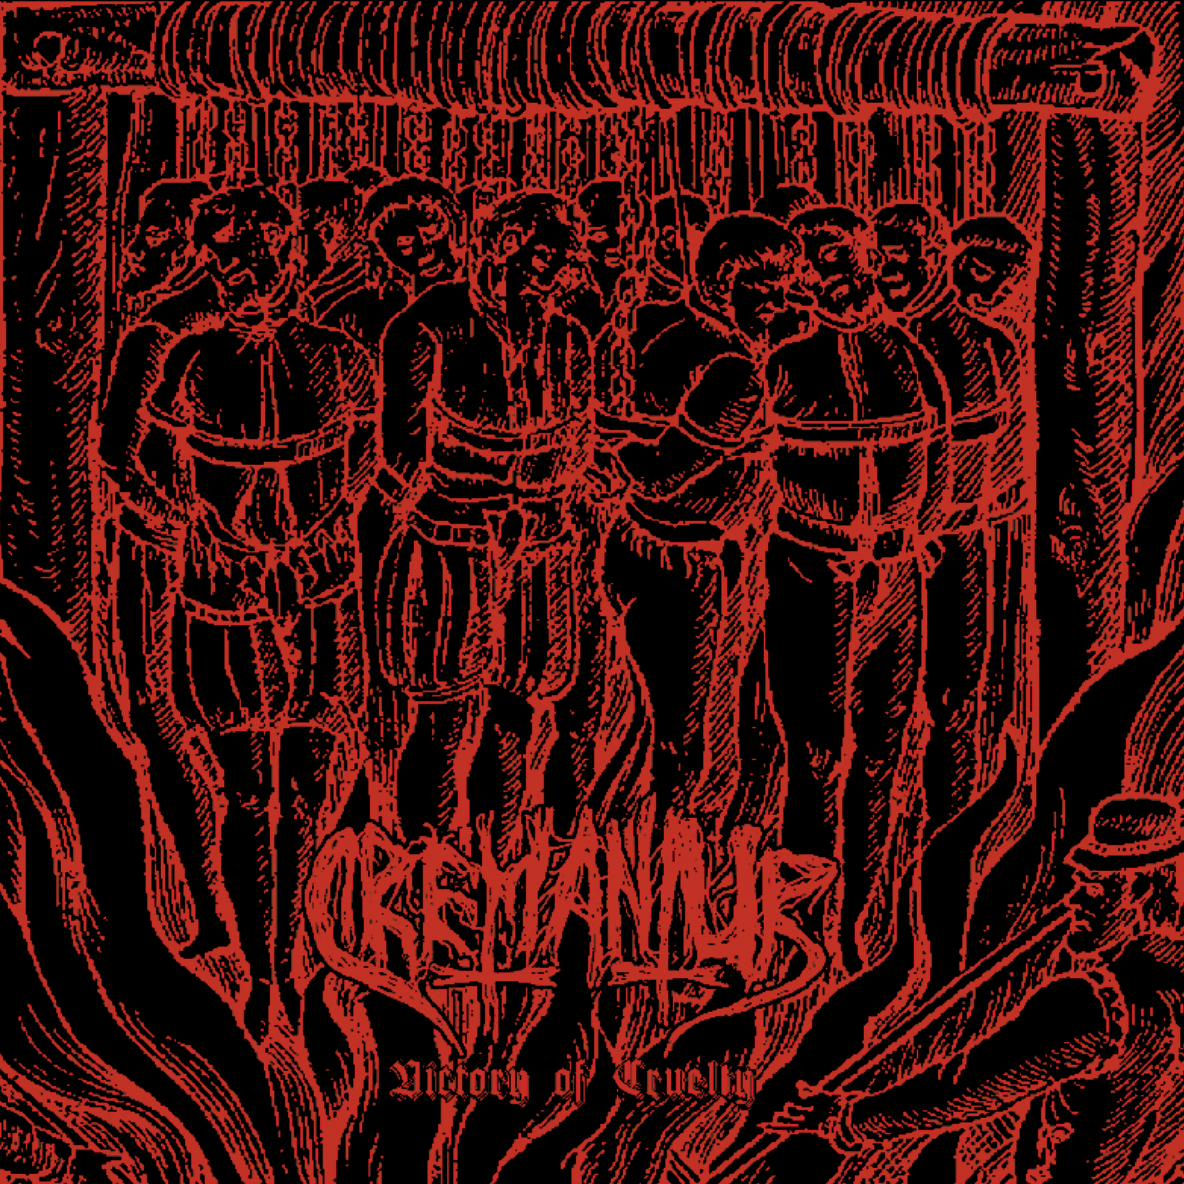 Cremantur - Victory of Cruelty (Red EP)